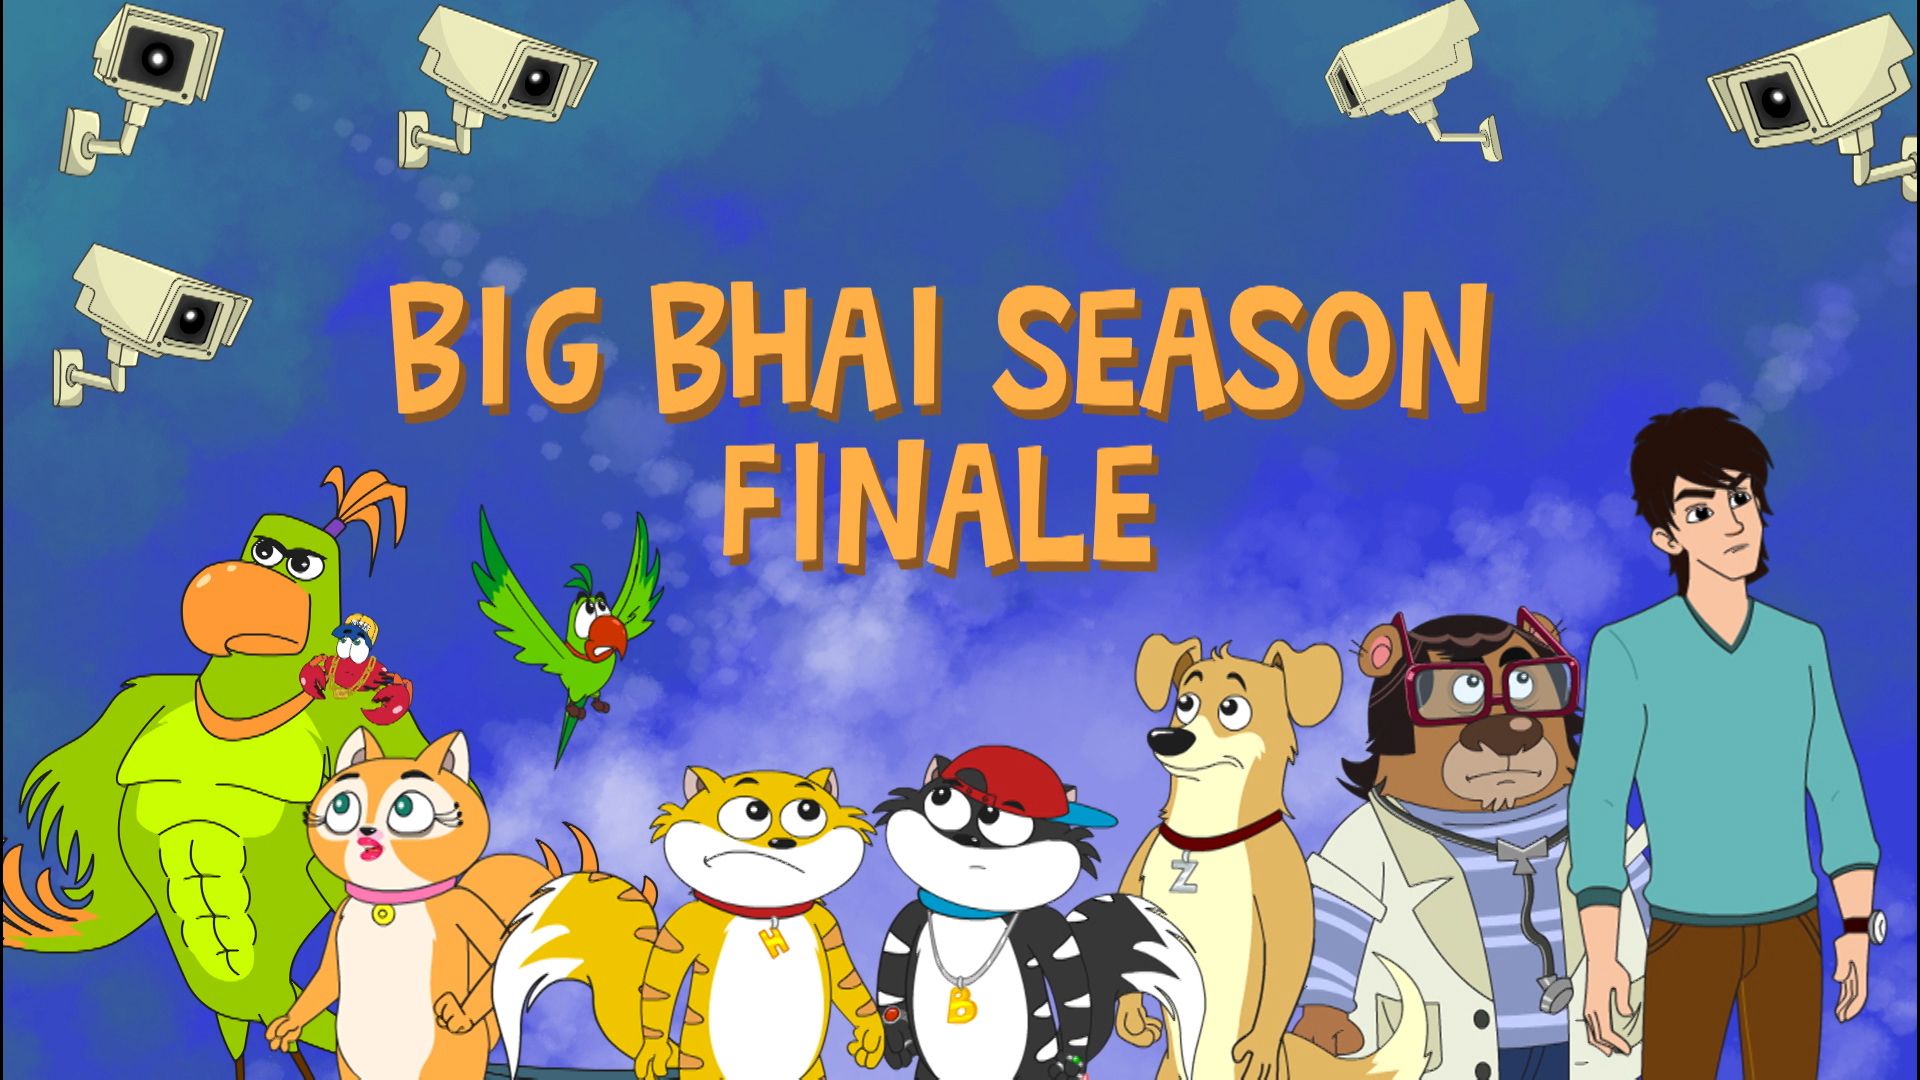 Big Bhai Season Finale